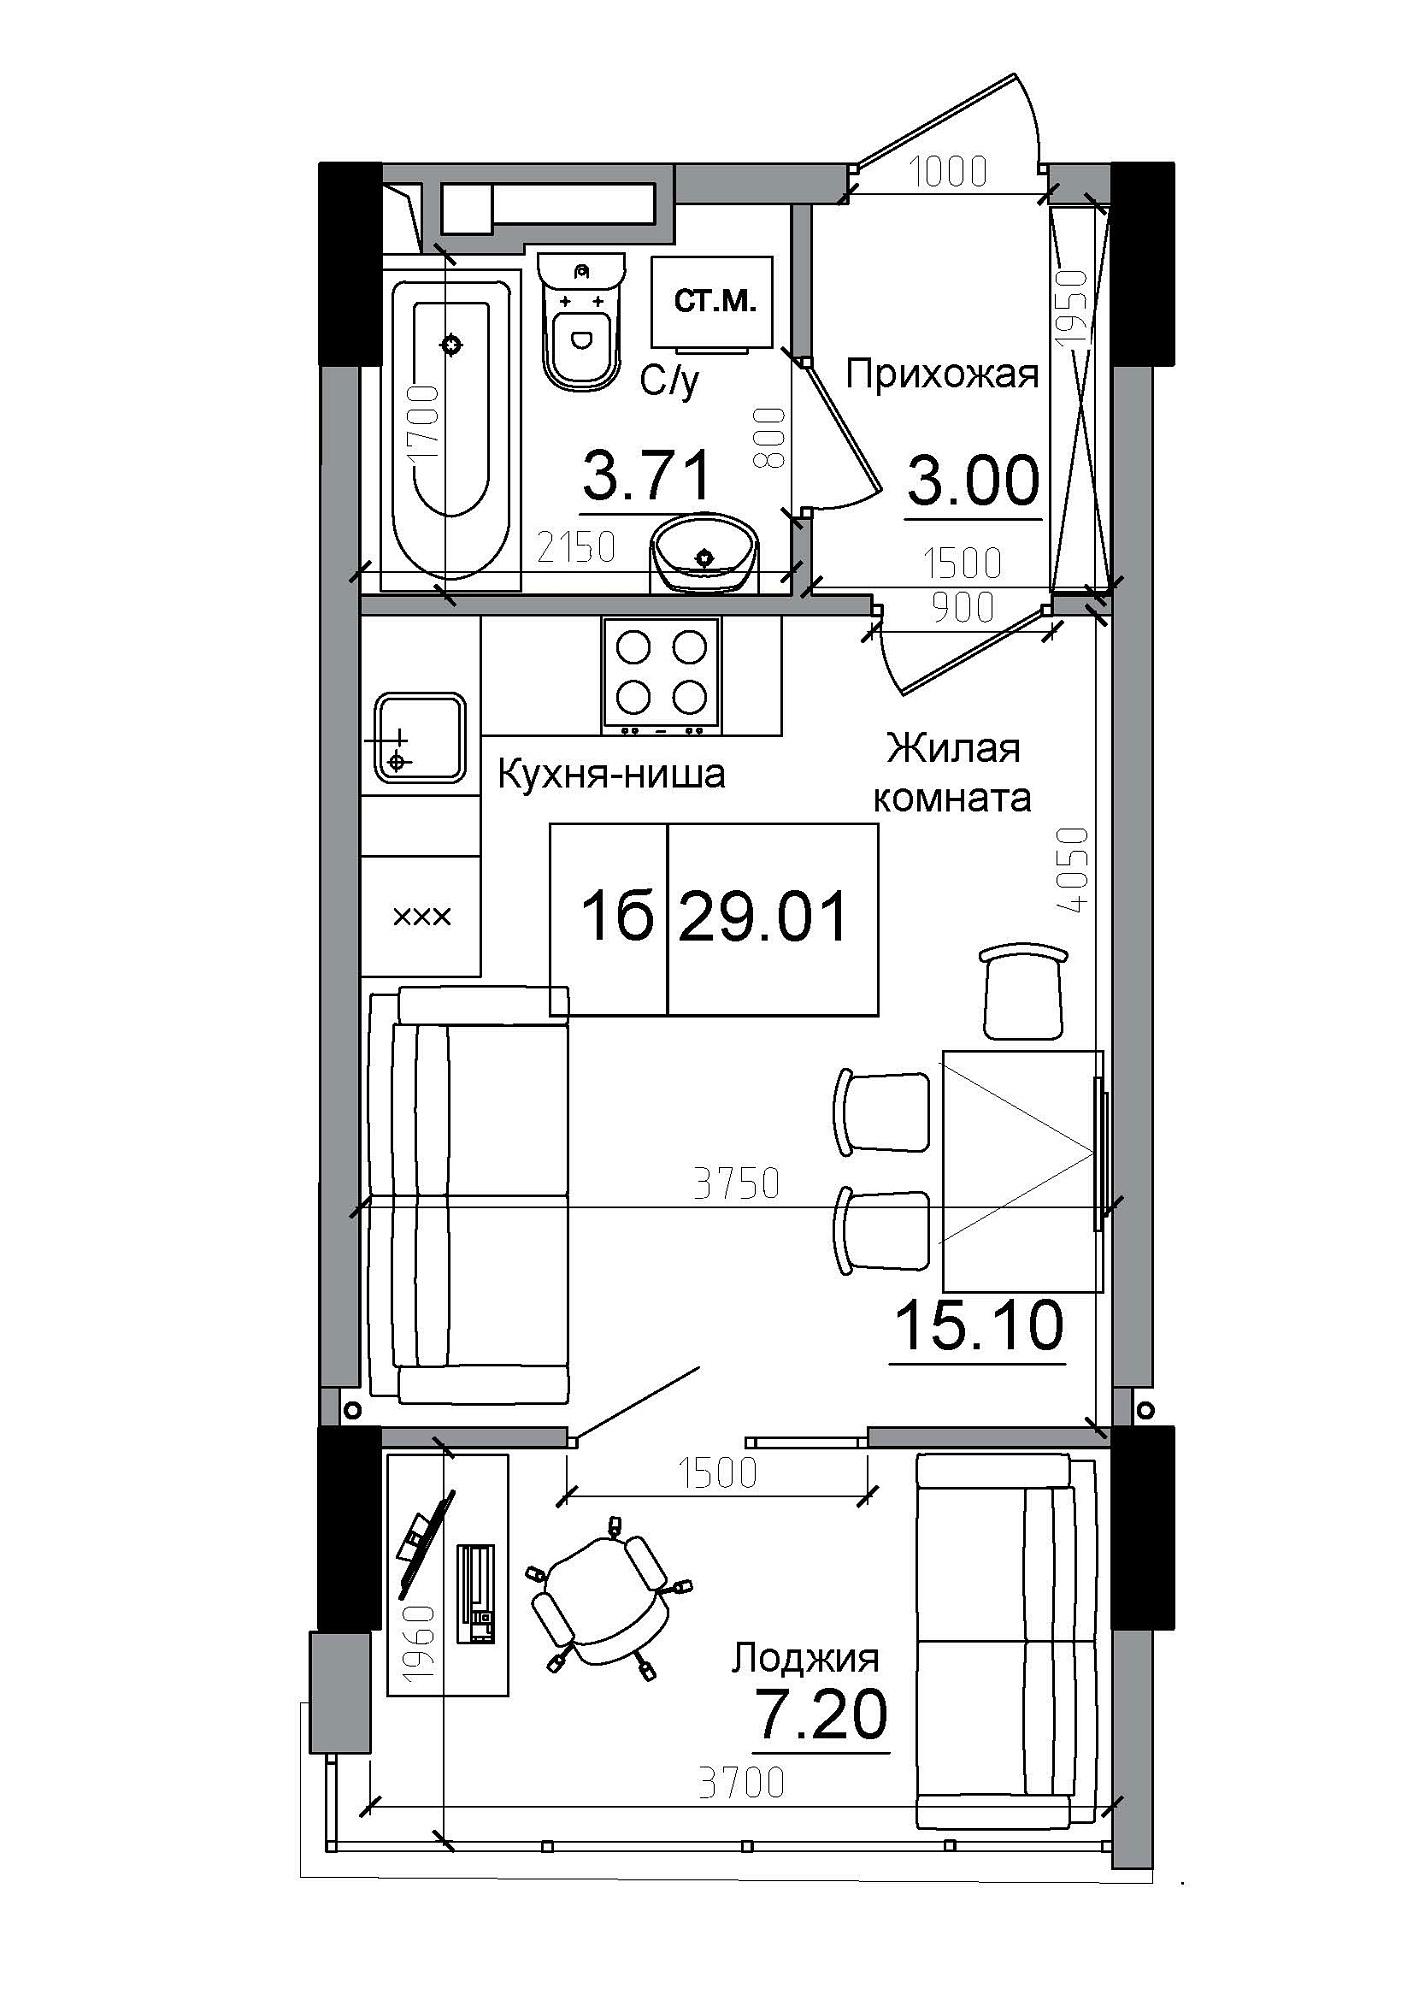 Planning Smart flats area 29.01m2, AB-12-03/00002.